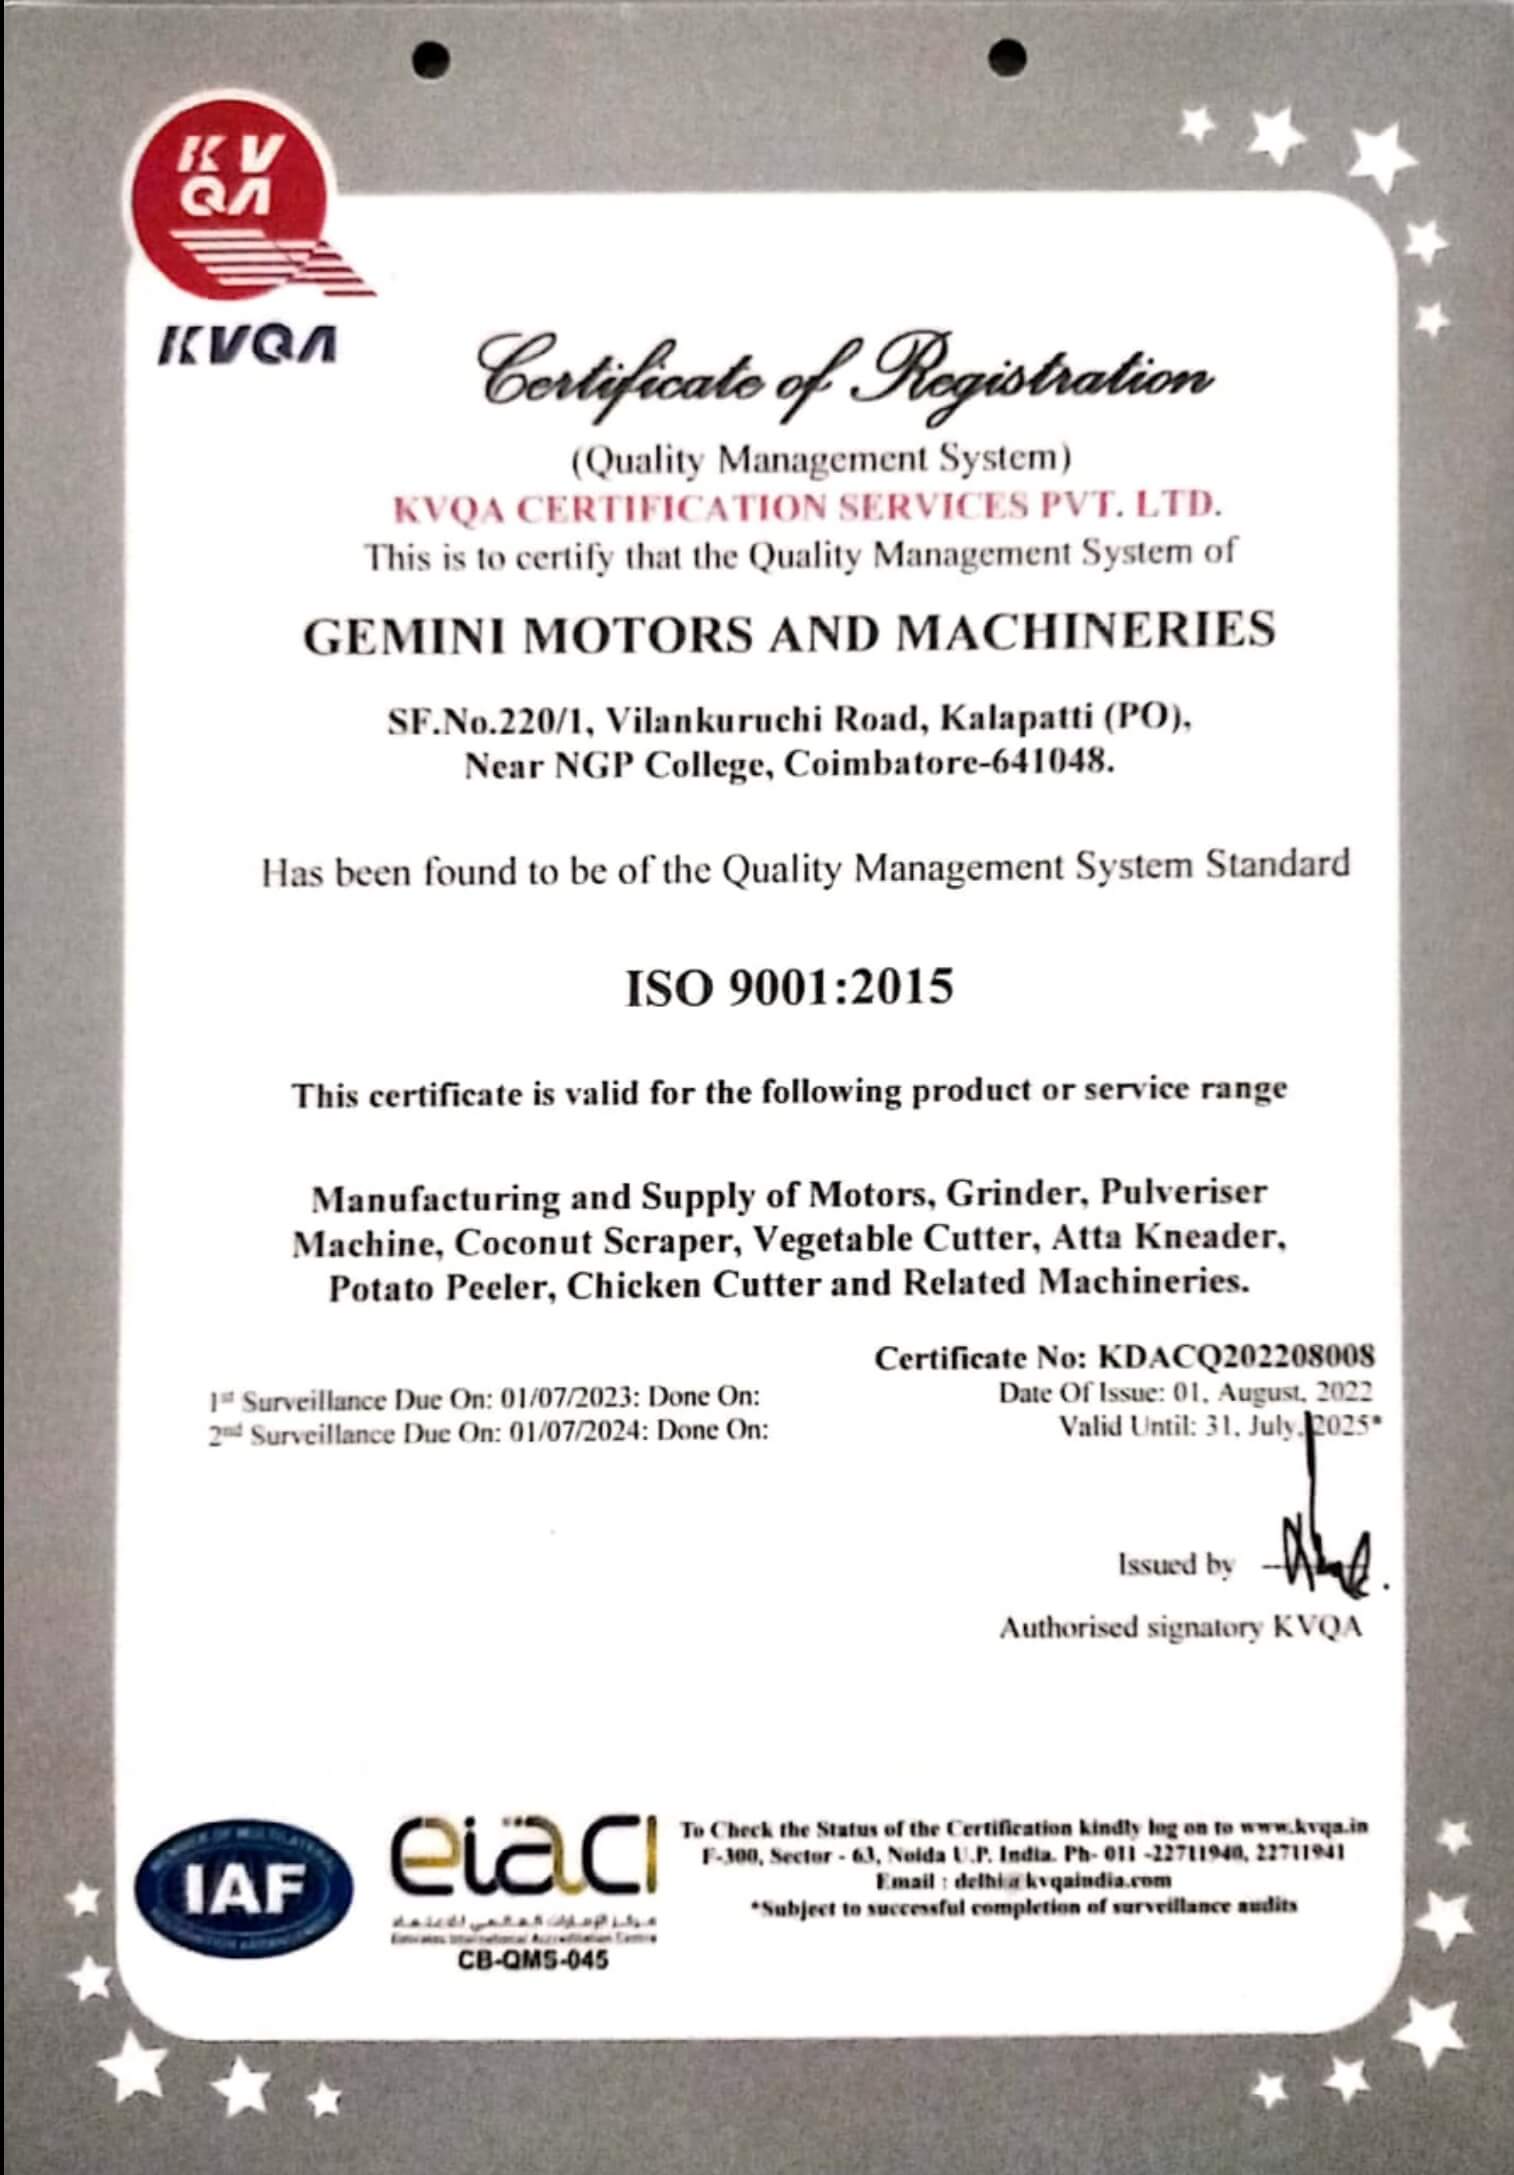 isi certification of gemini motors & machinery in coimbatore